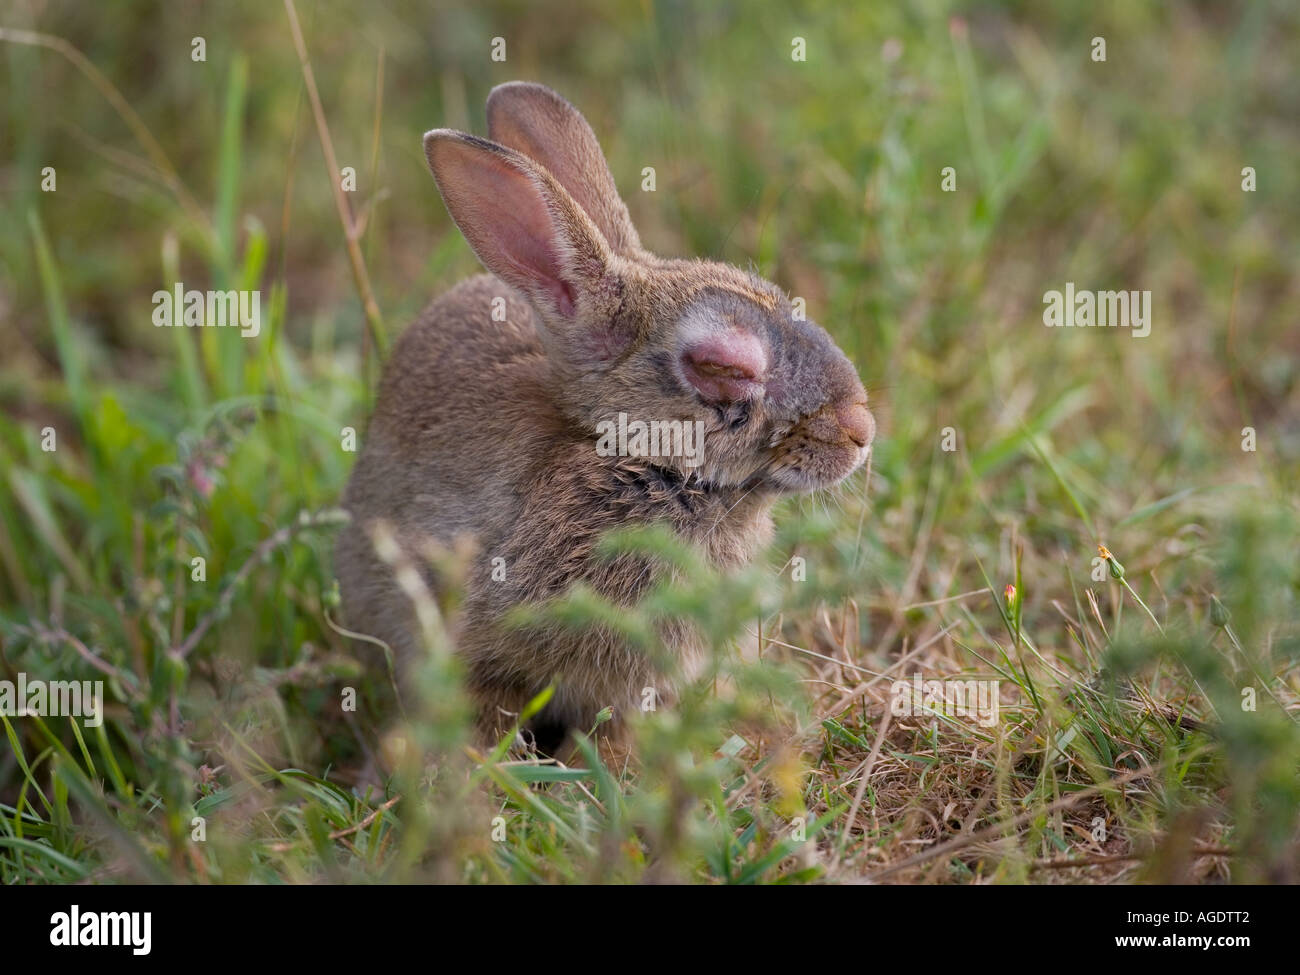 Rabbit Oryctolagus cuniculus with Myxomatosis Stock Photo